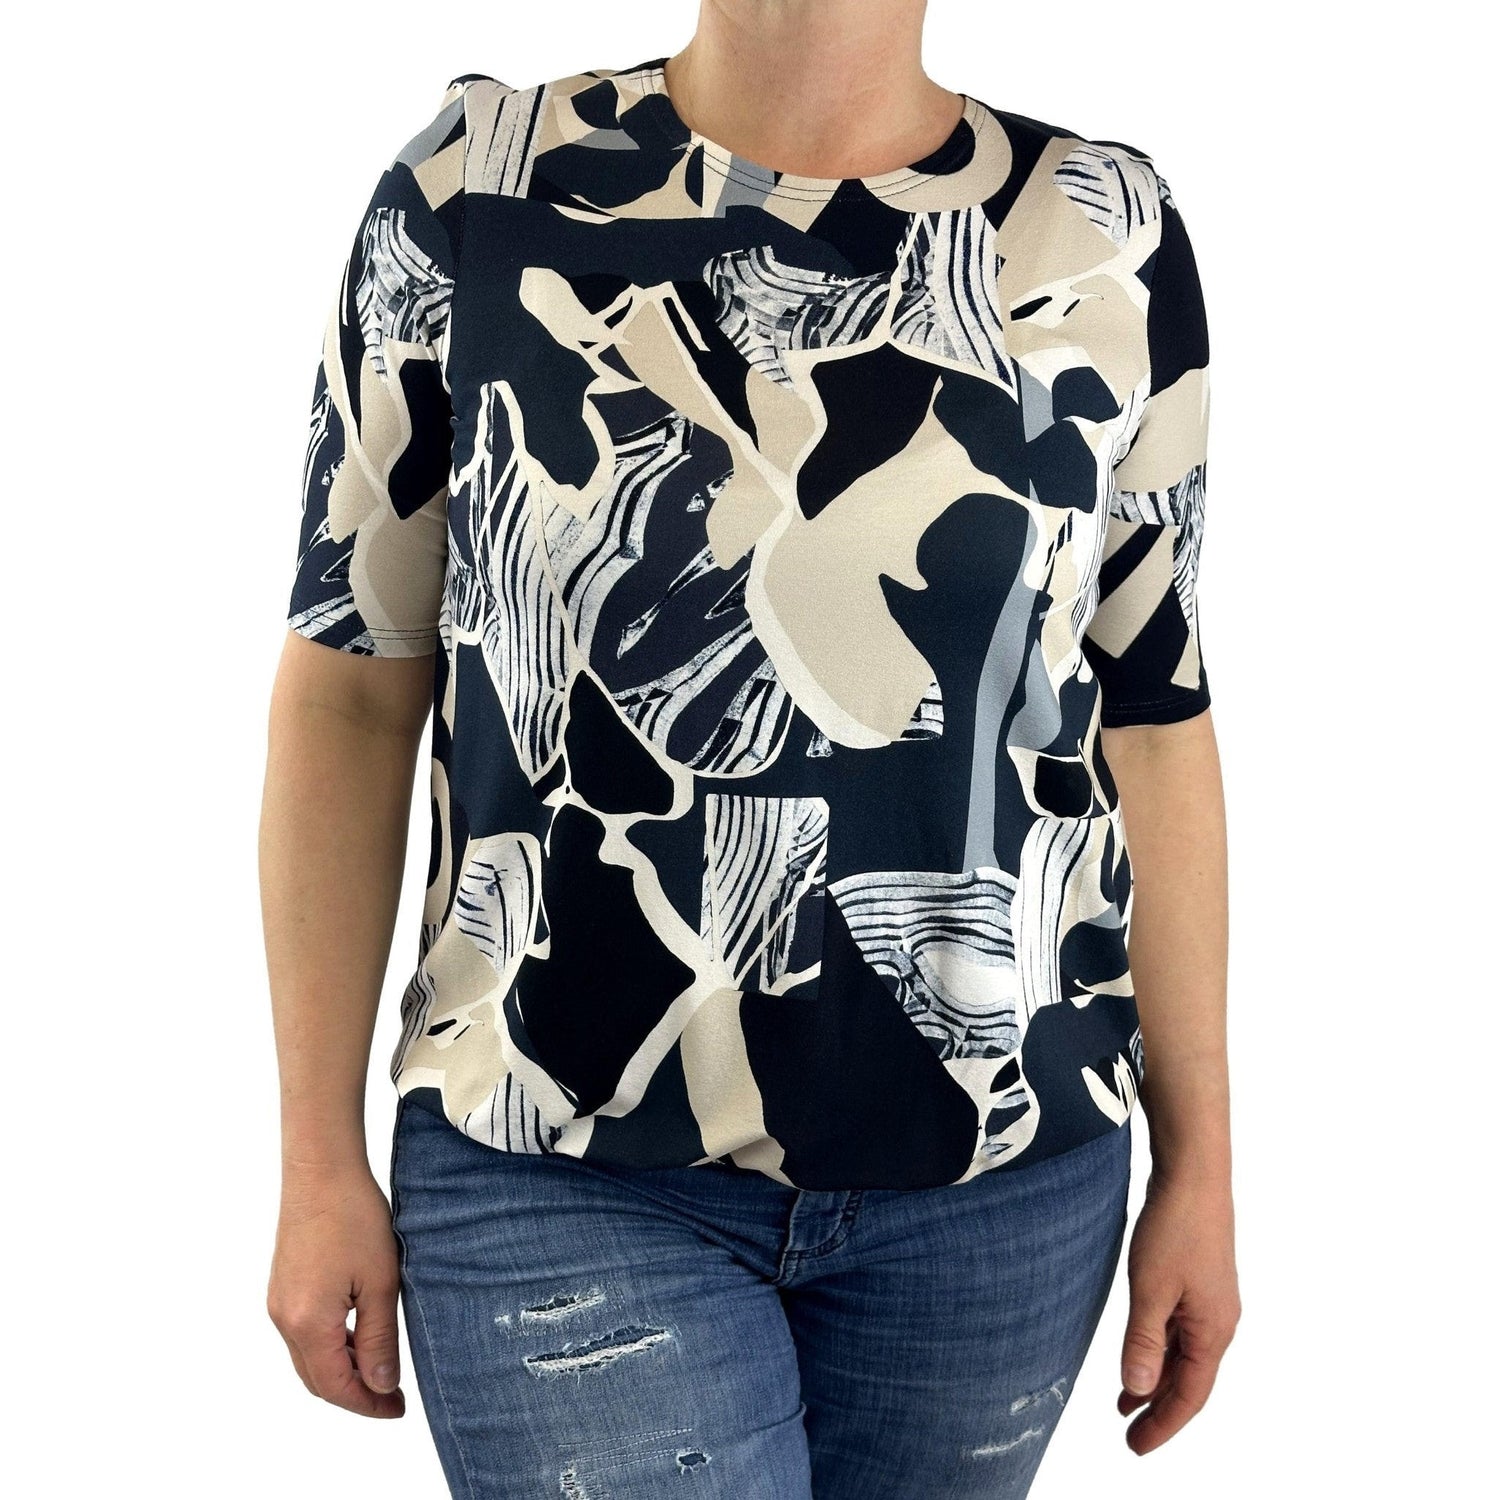 Seidel Shirt A 2015. Mode von Seidel